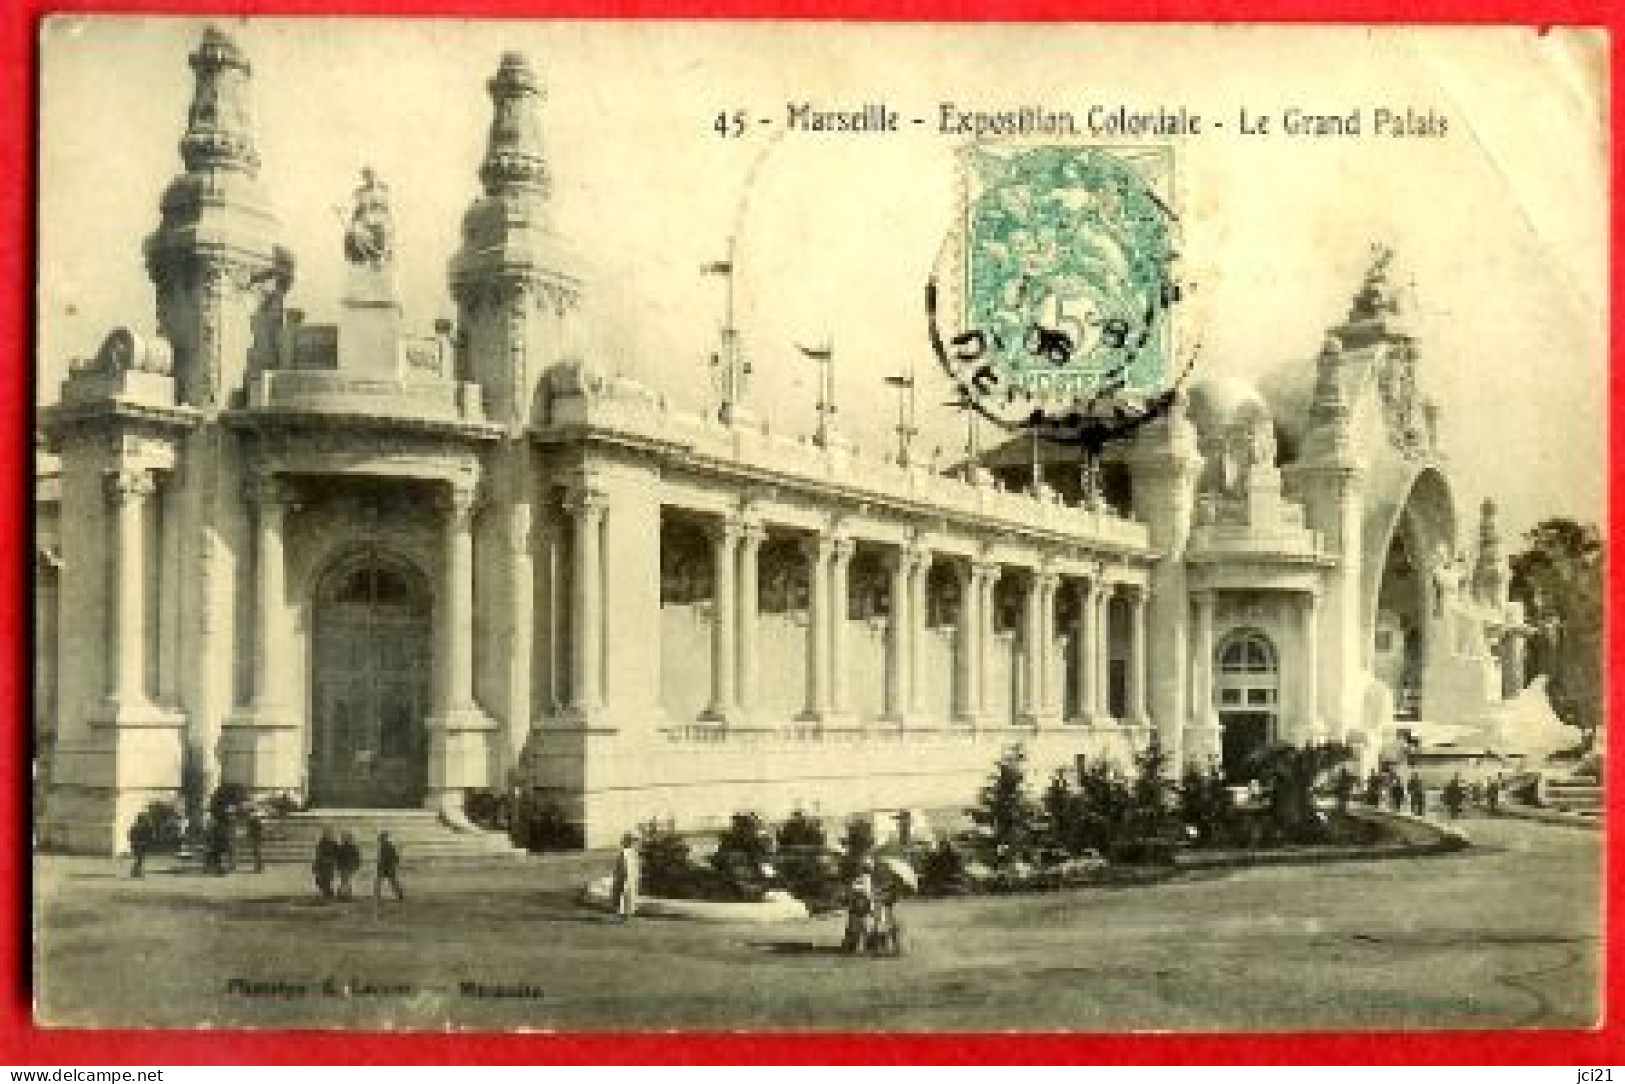 13 - MARSEILLE - EXPOSITION COLONIALE - LE GRAND PALAIS - CPA ANIMÉE (337)_CP70 - Expositions Coloniales 1906 - 1922